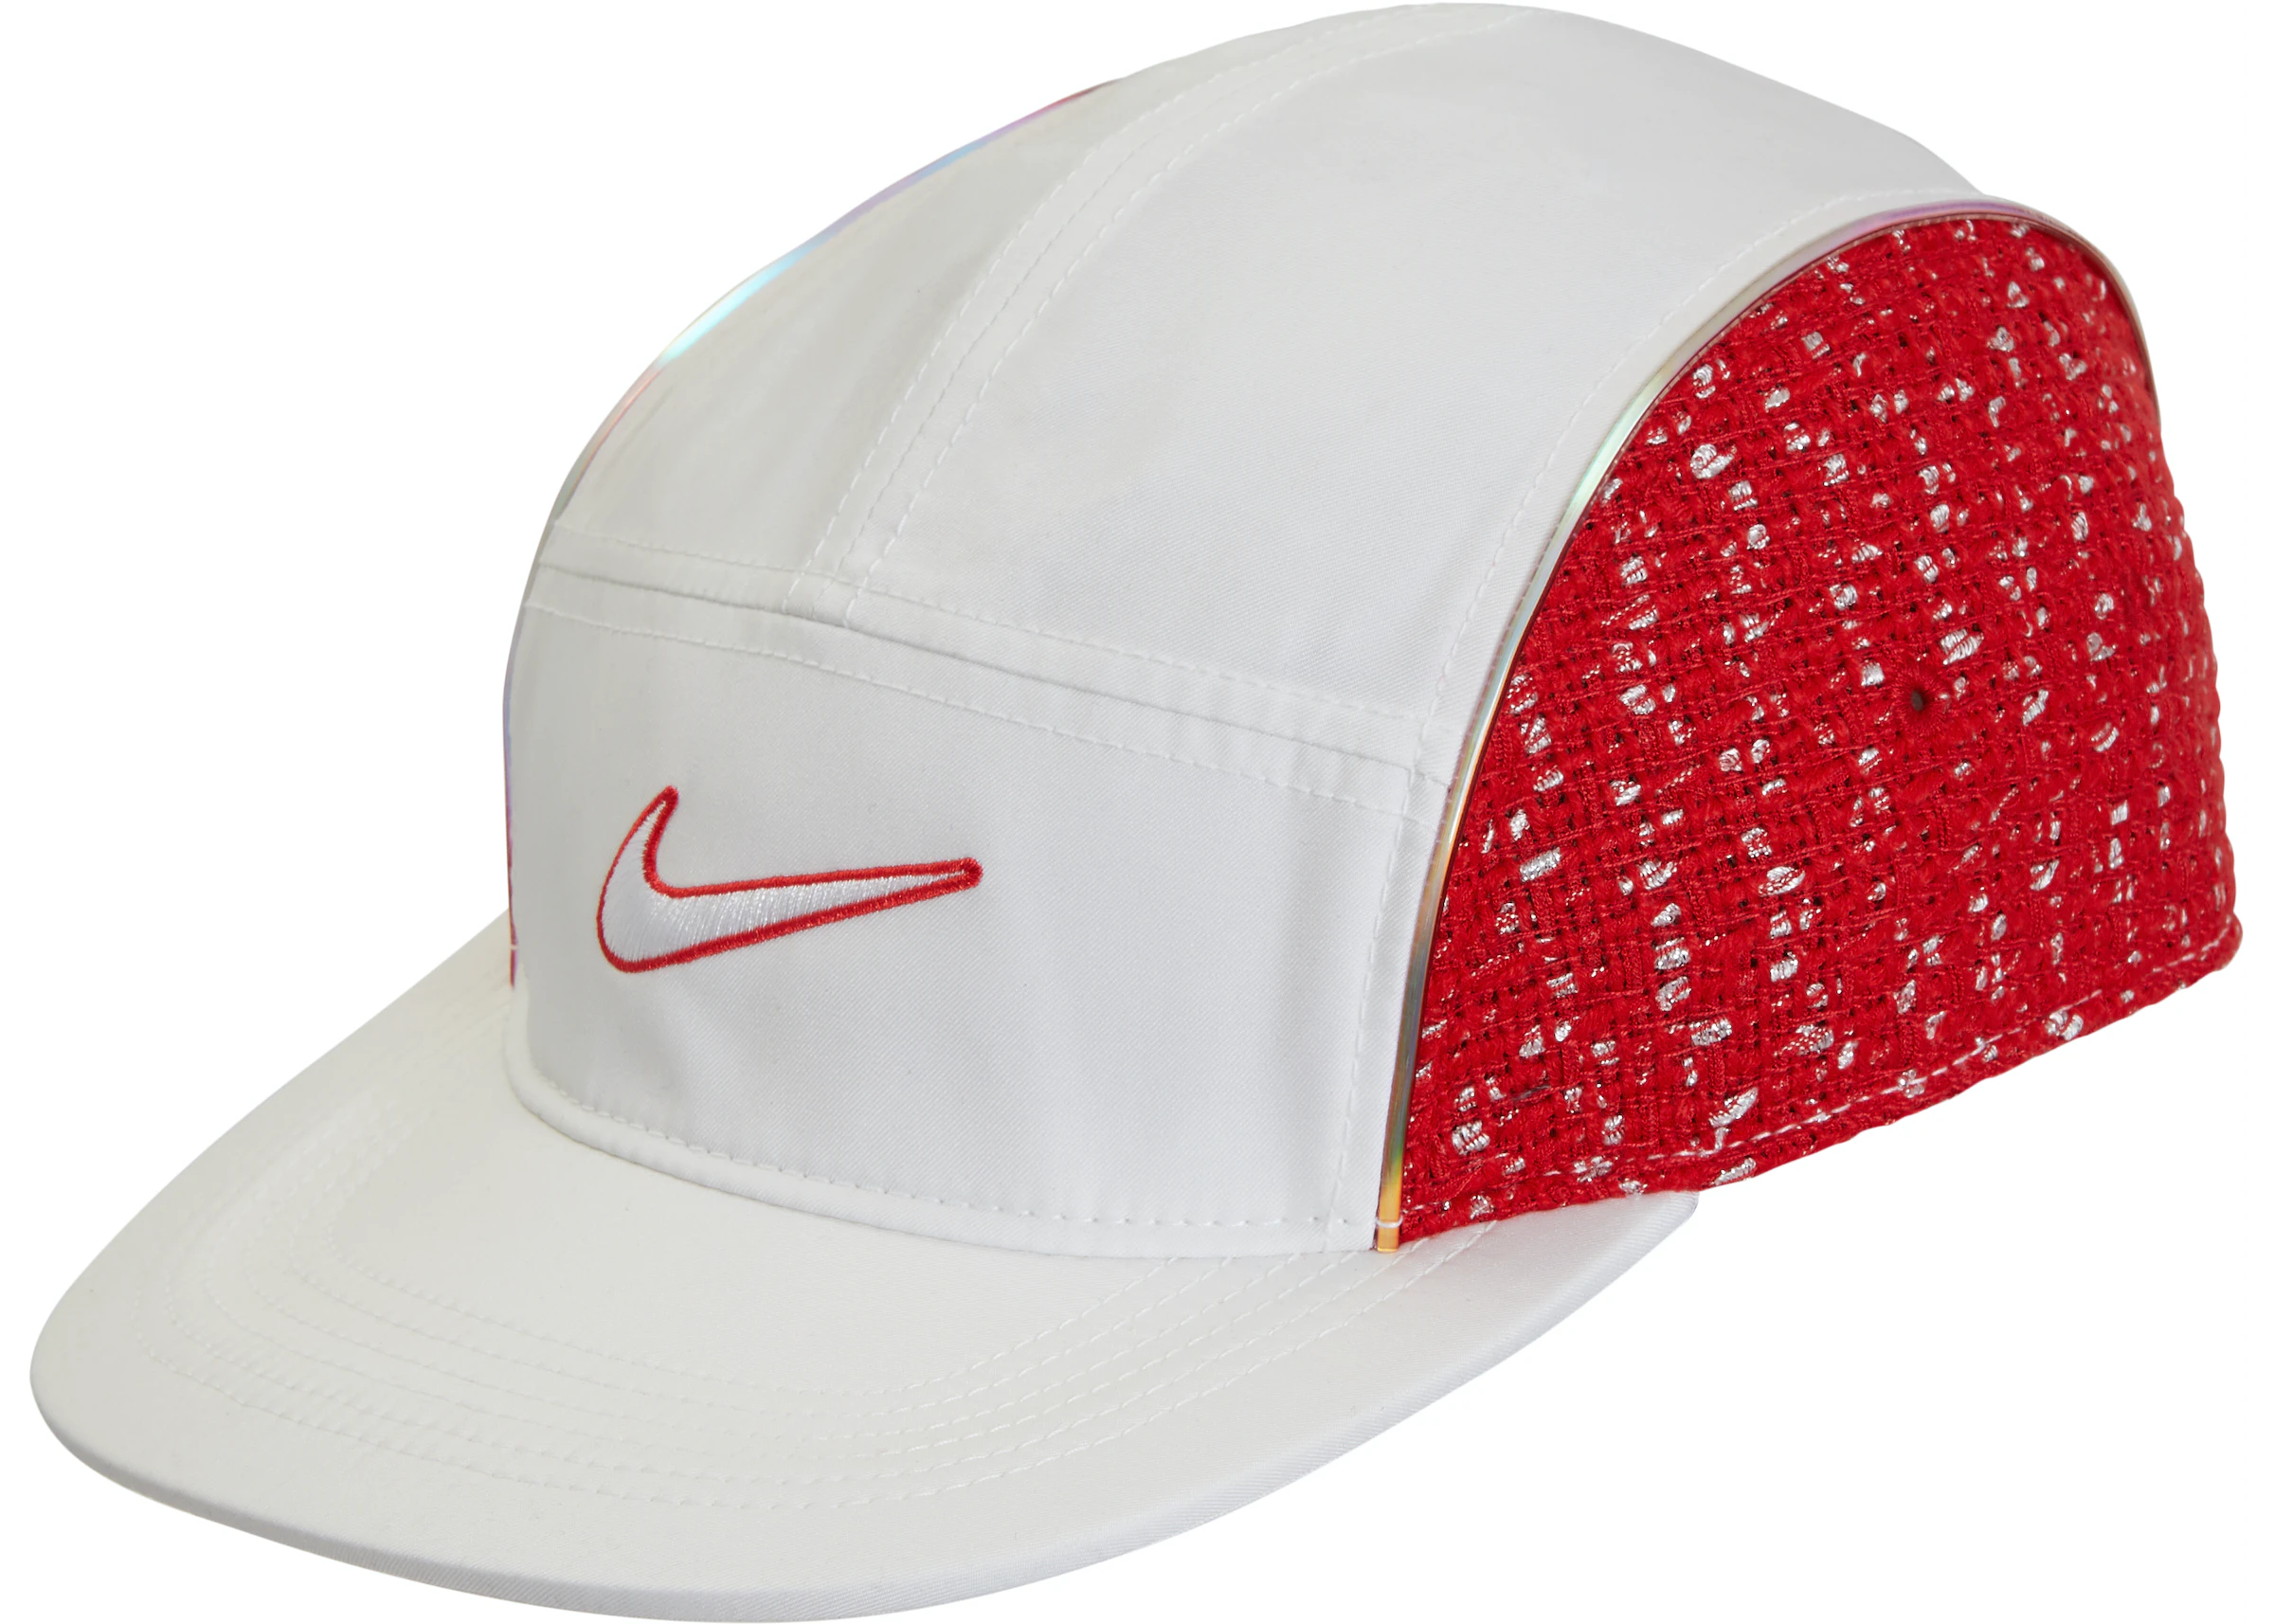 Racional La base de datos Polinizador Supreme Nike Boucle Running Hat White - SS19 - ES